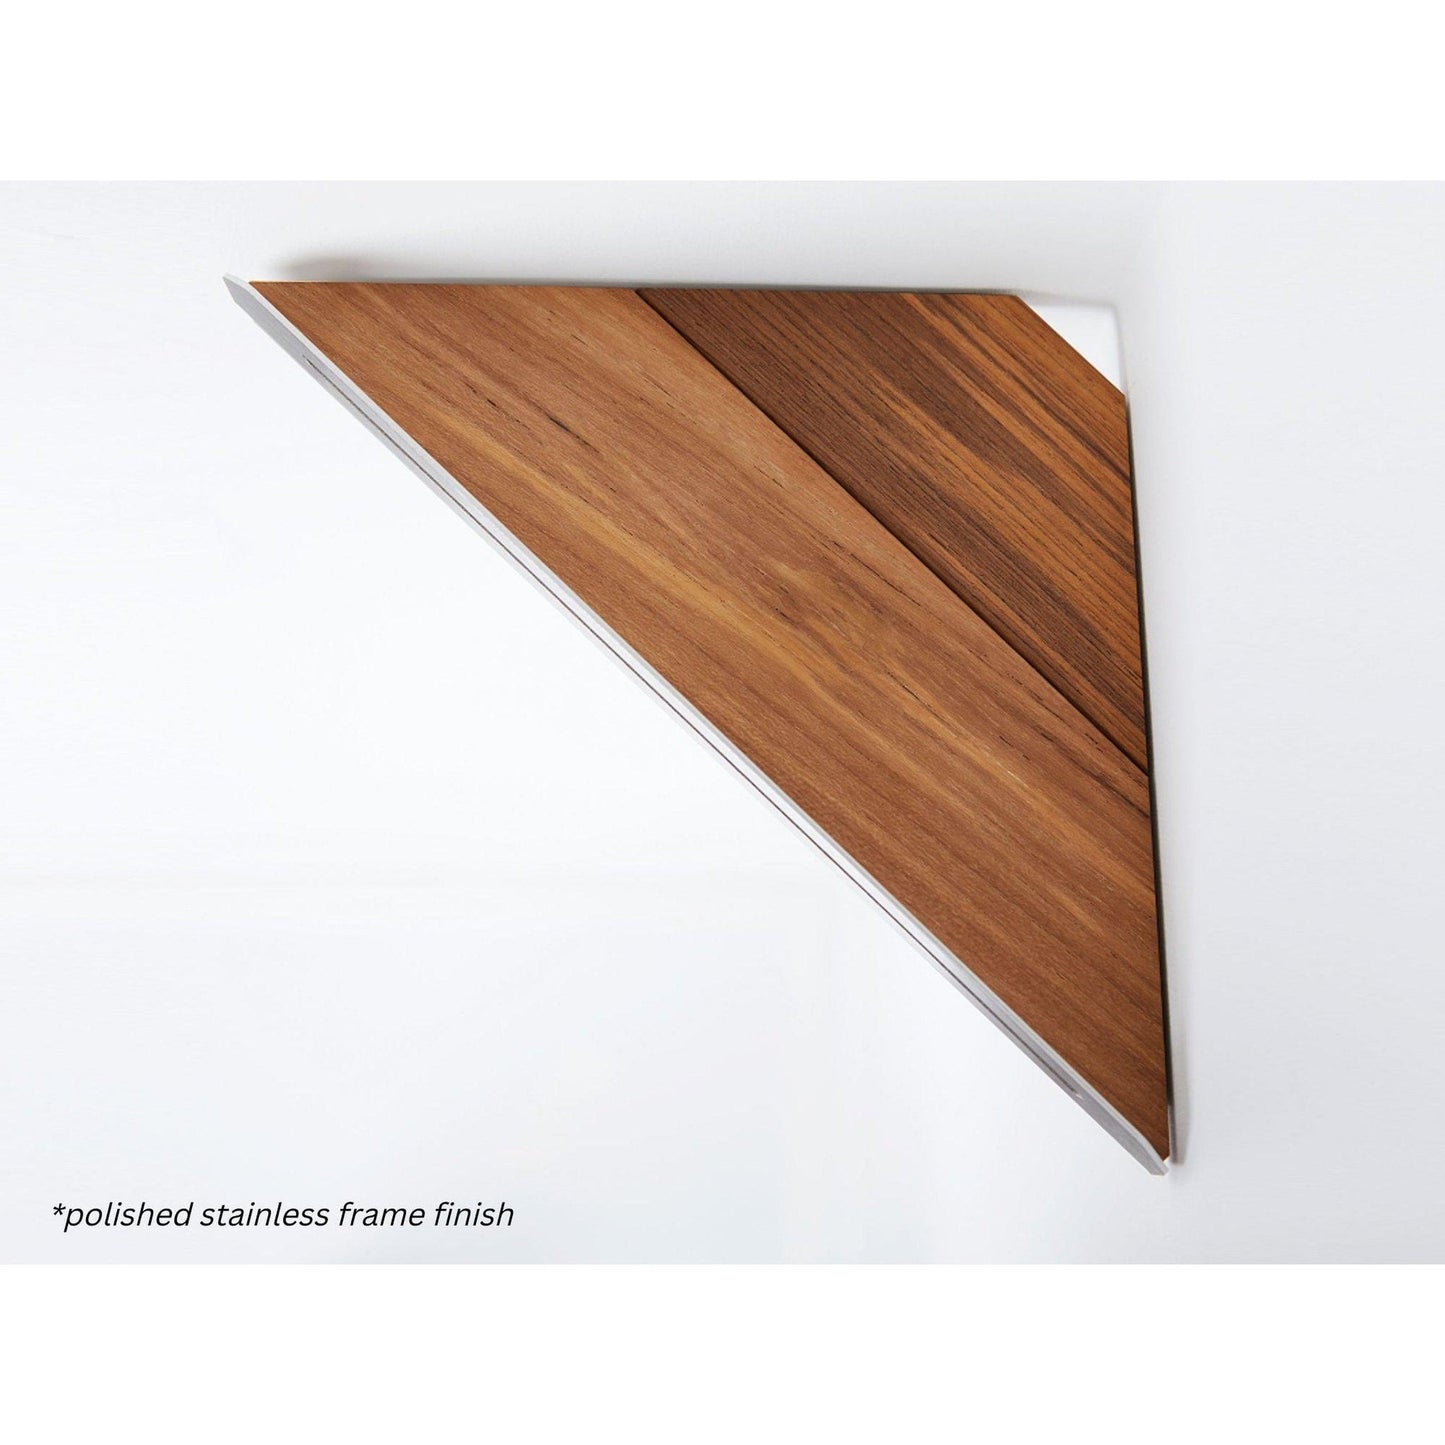 Seachrome Coronado 700 Series 14" x 8" Corner Shower Shelf With Natural Teak Wood Insert and White Powder Coated Stainless Steel Frame